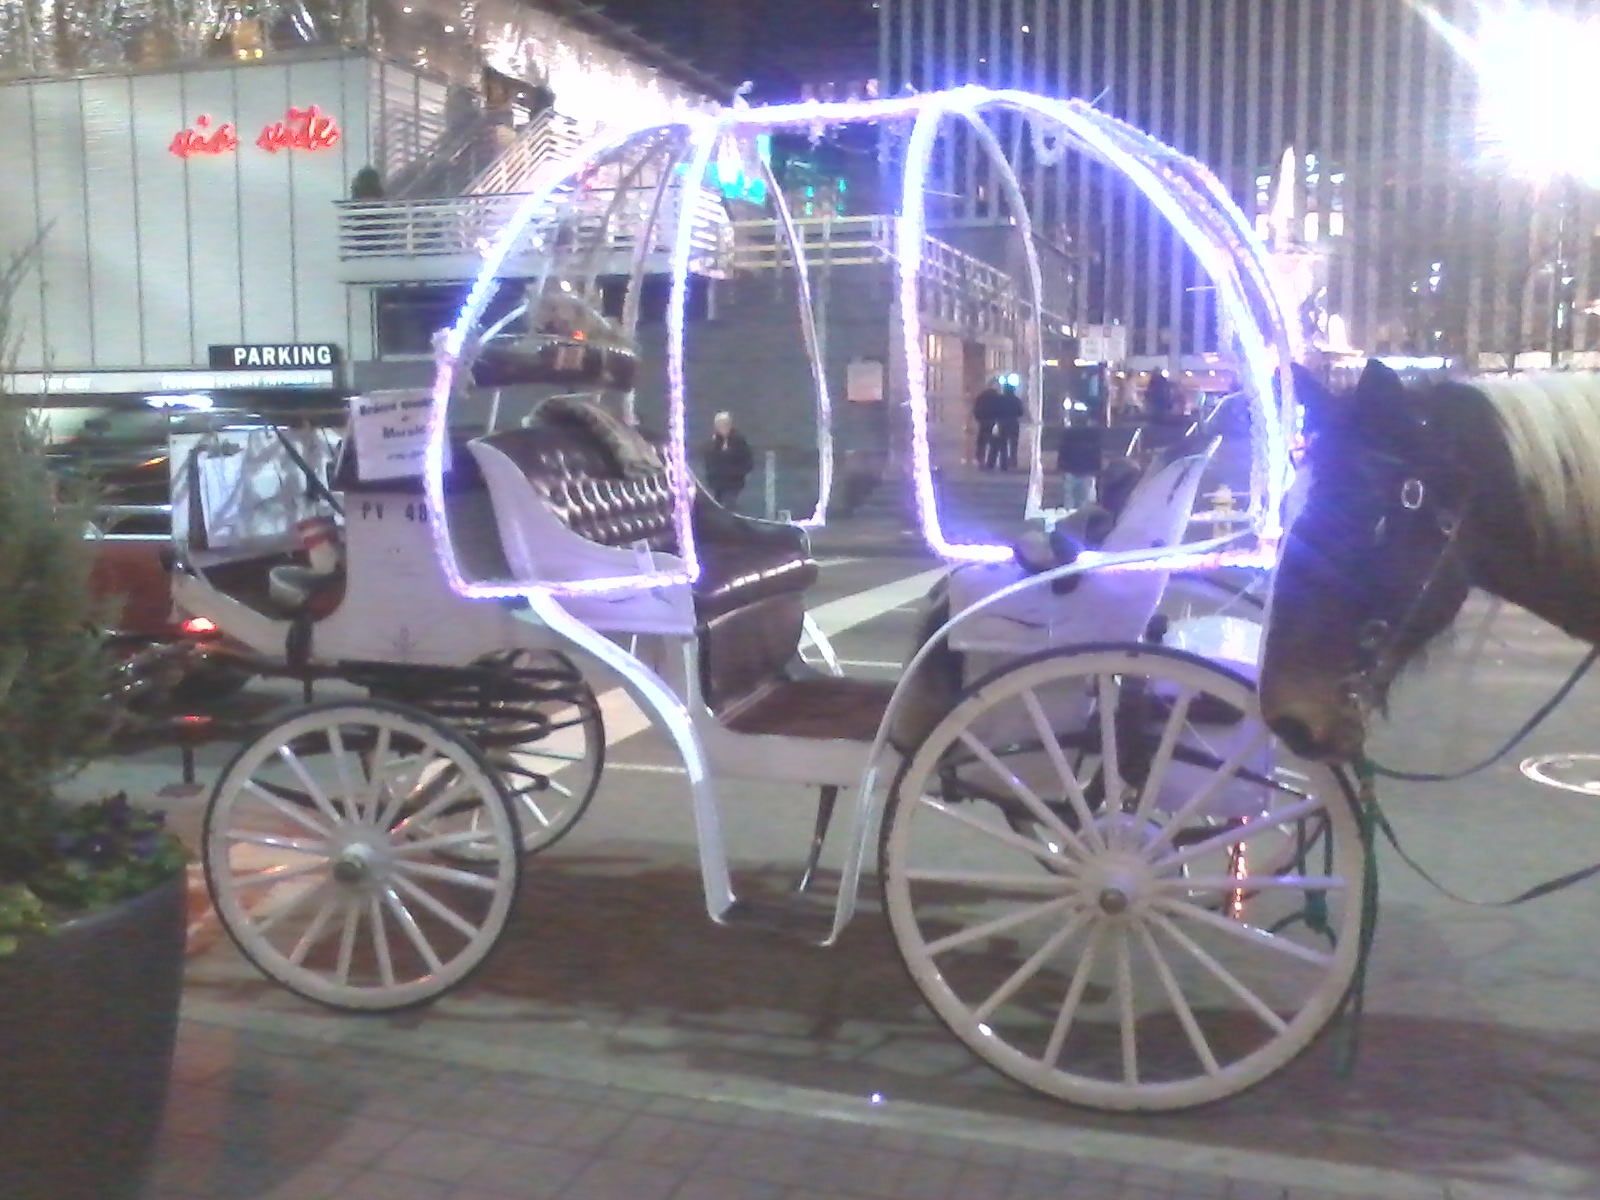 Horse-drawn carriage used in Covington Kentucky - KY, Cincinnati Ohio - OH and Newport Kentucky - KY